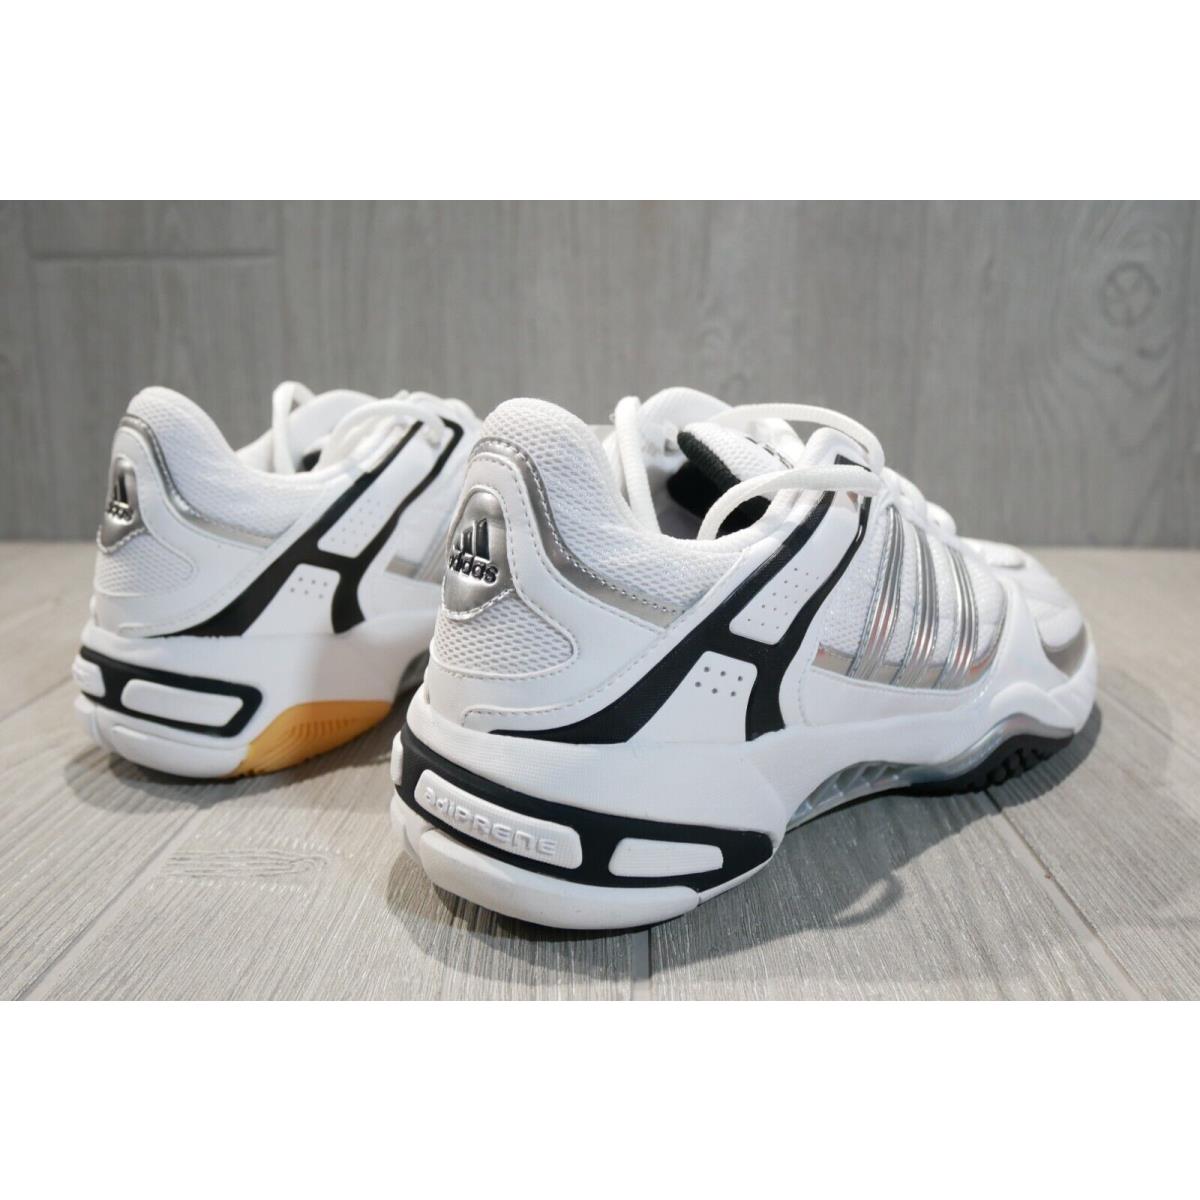 Adidas shoes Vintage - White 2